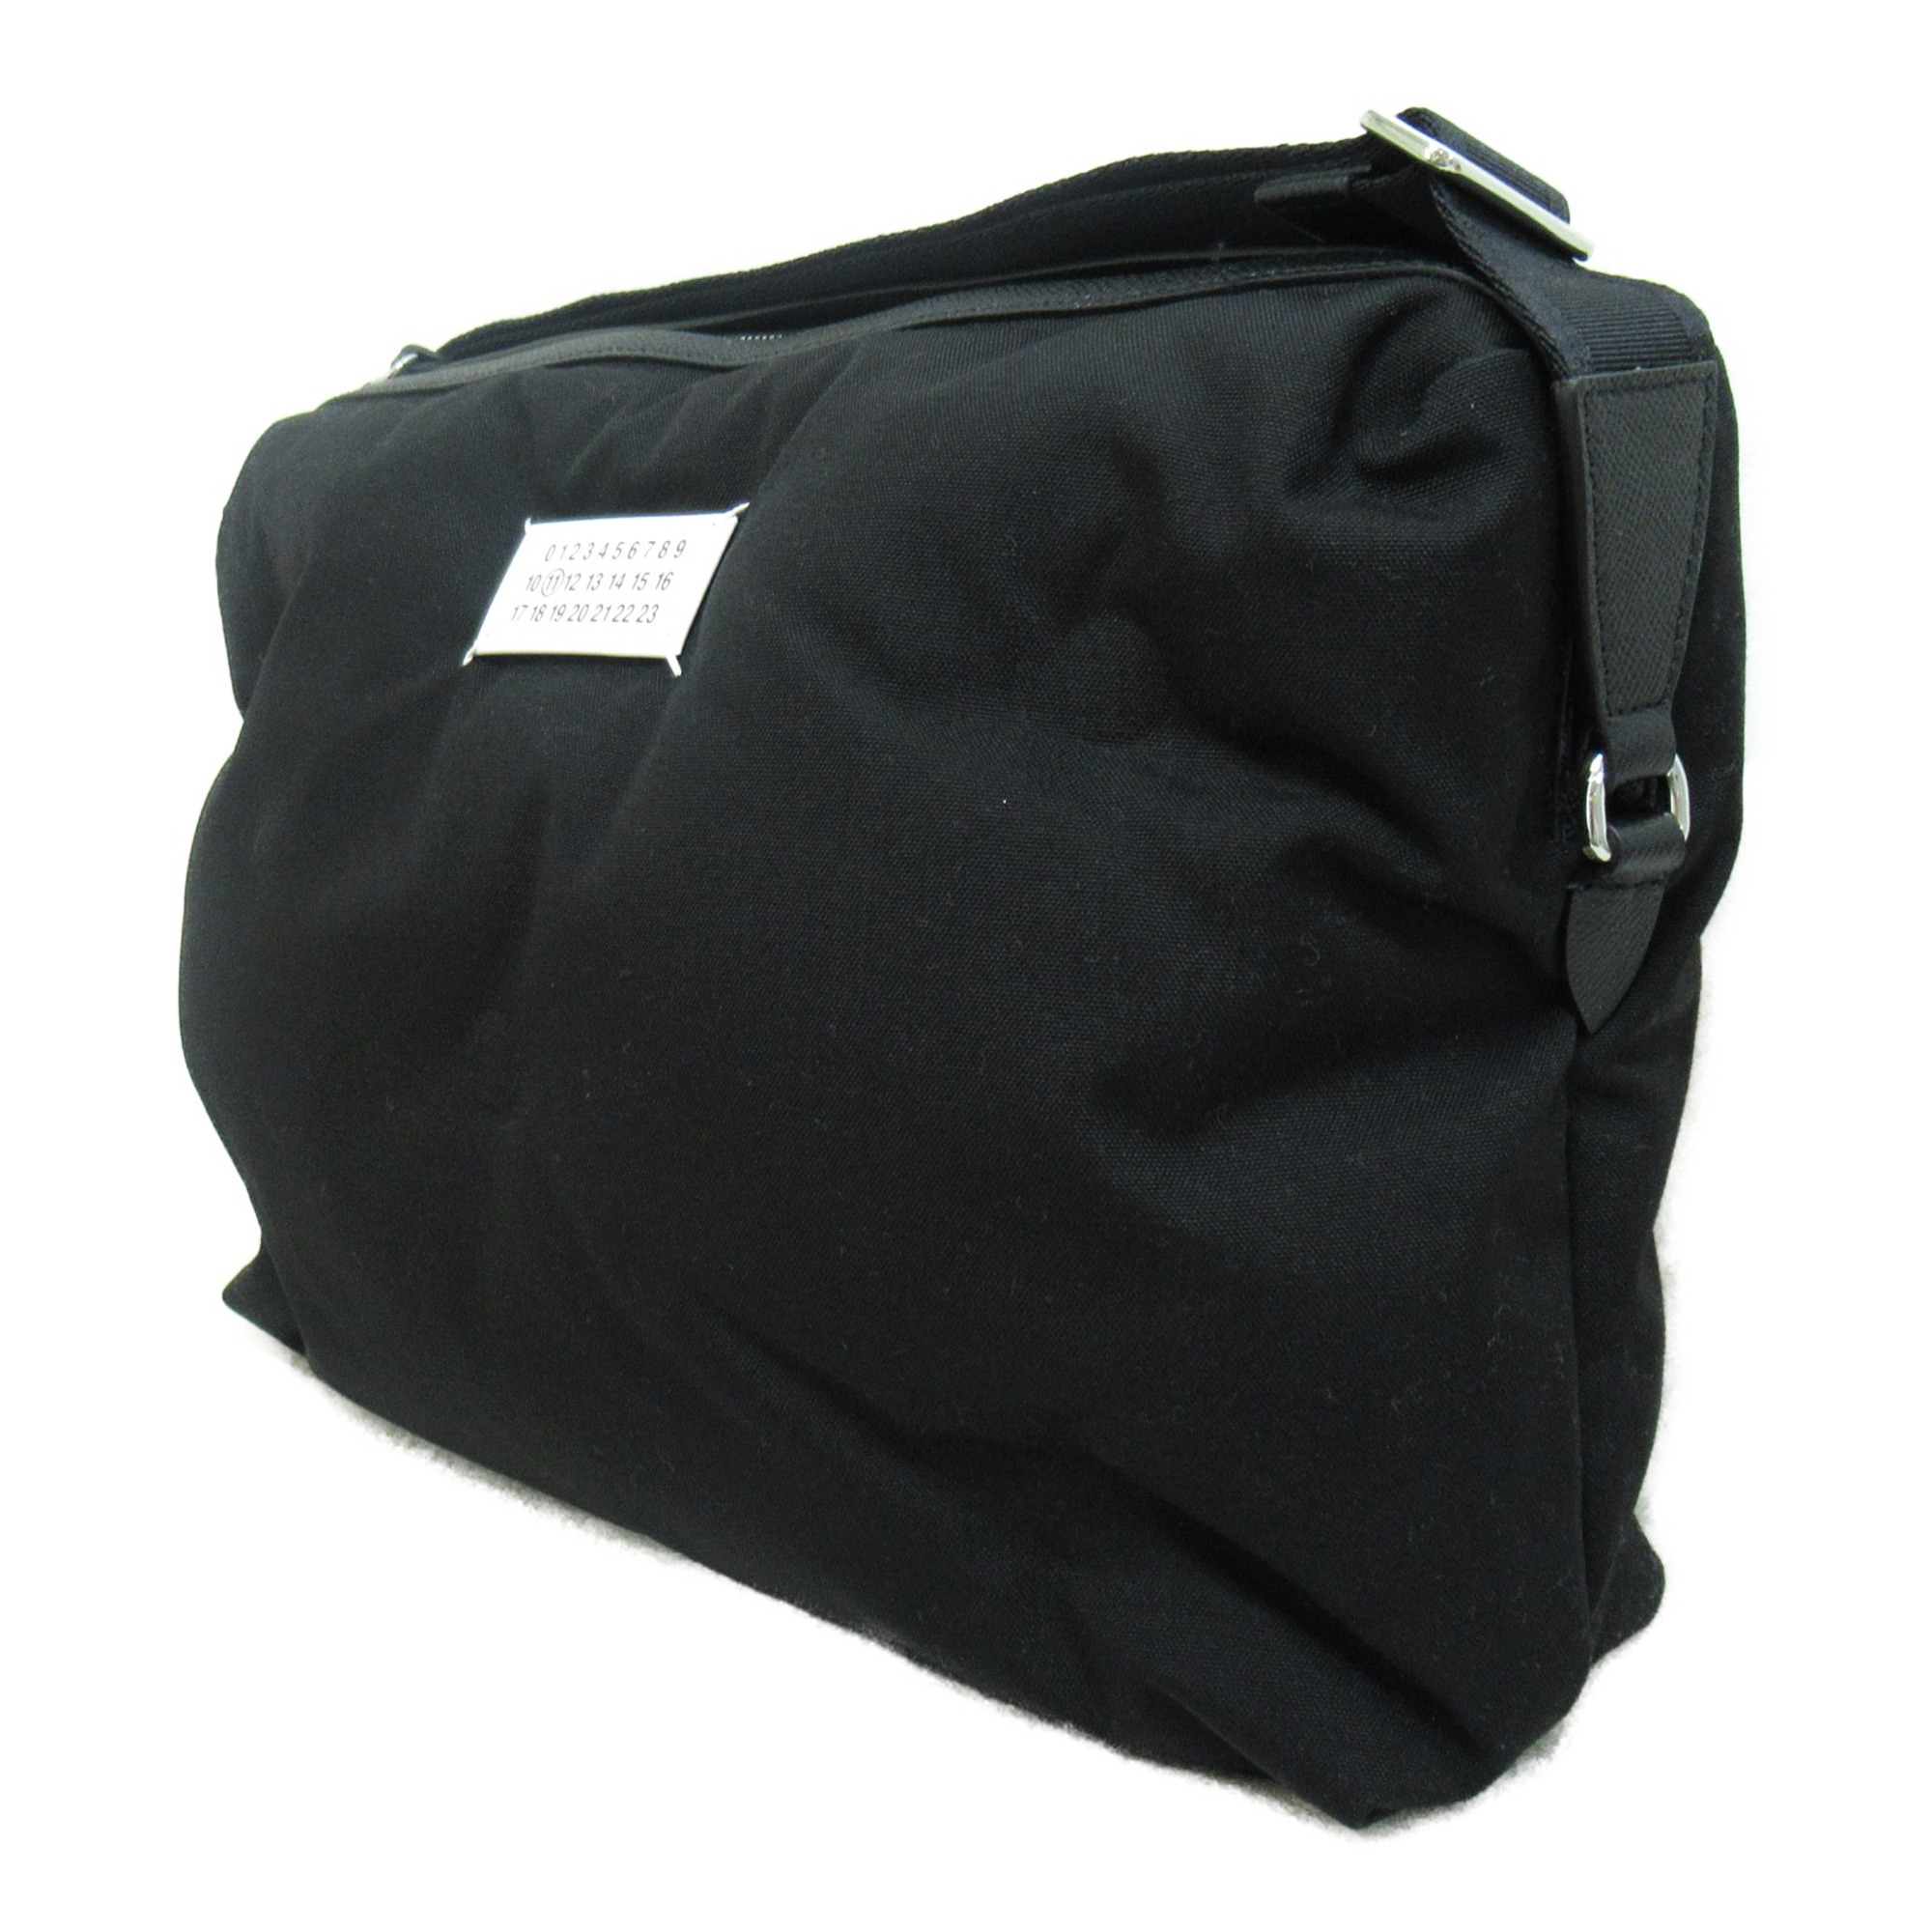 Maison Margiela Shoulder Bag Black canvas SB2WG0009P1511T8013